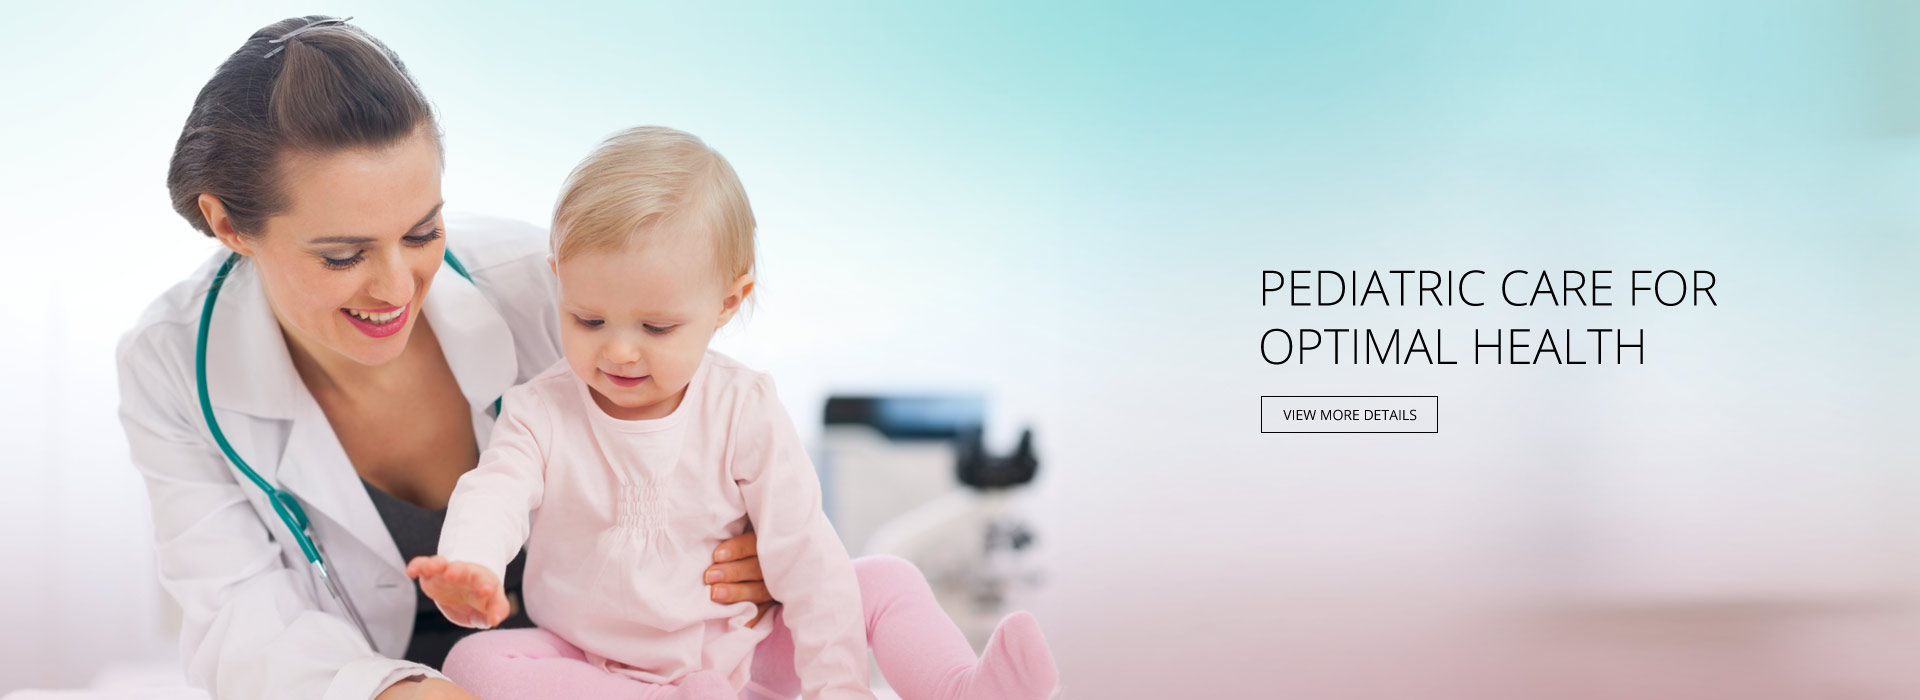 Pediatric Care for optimal Health